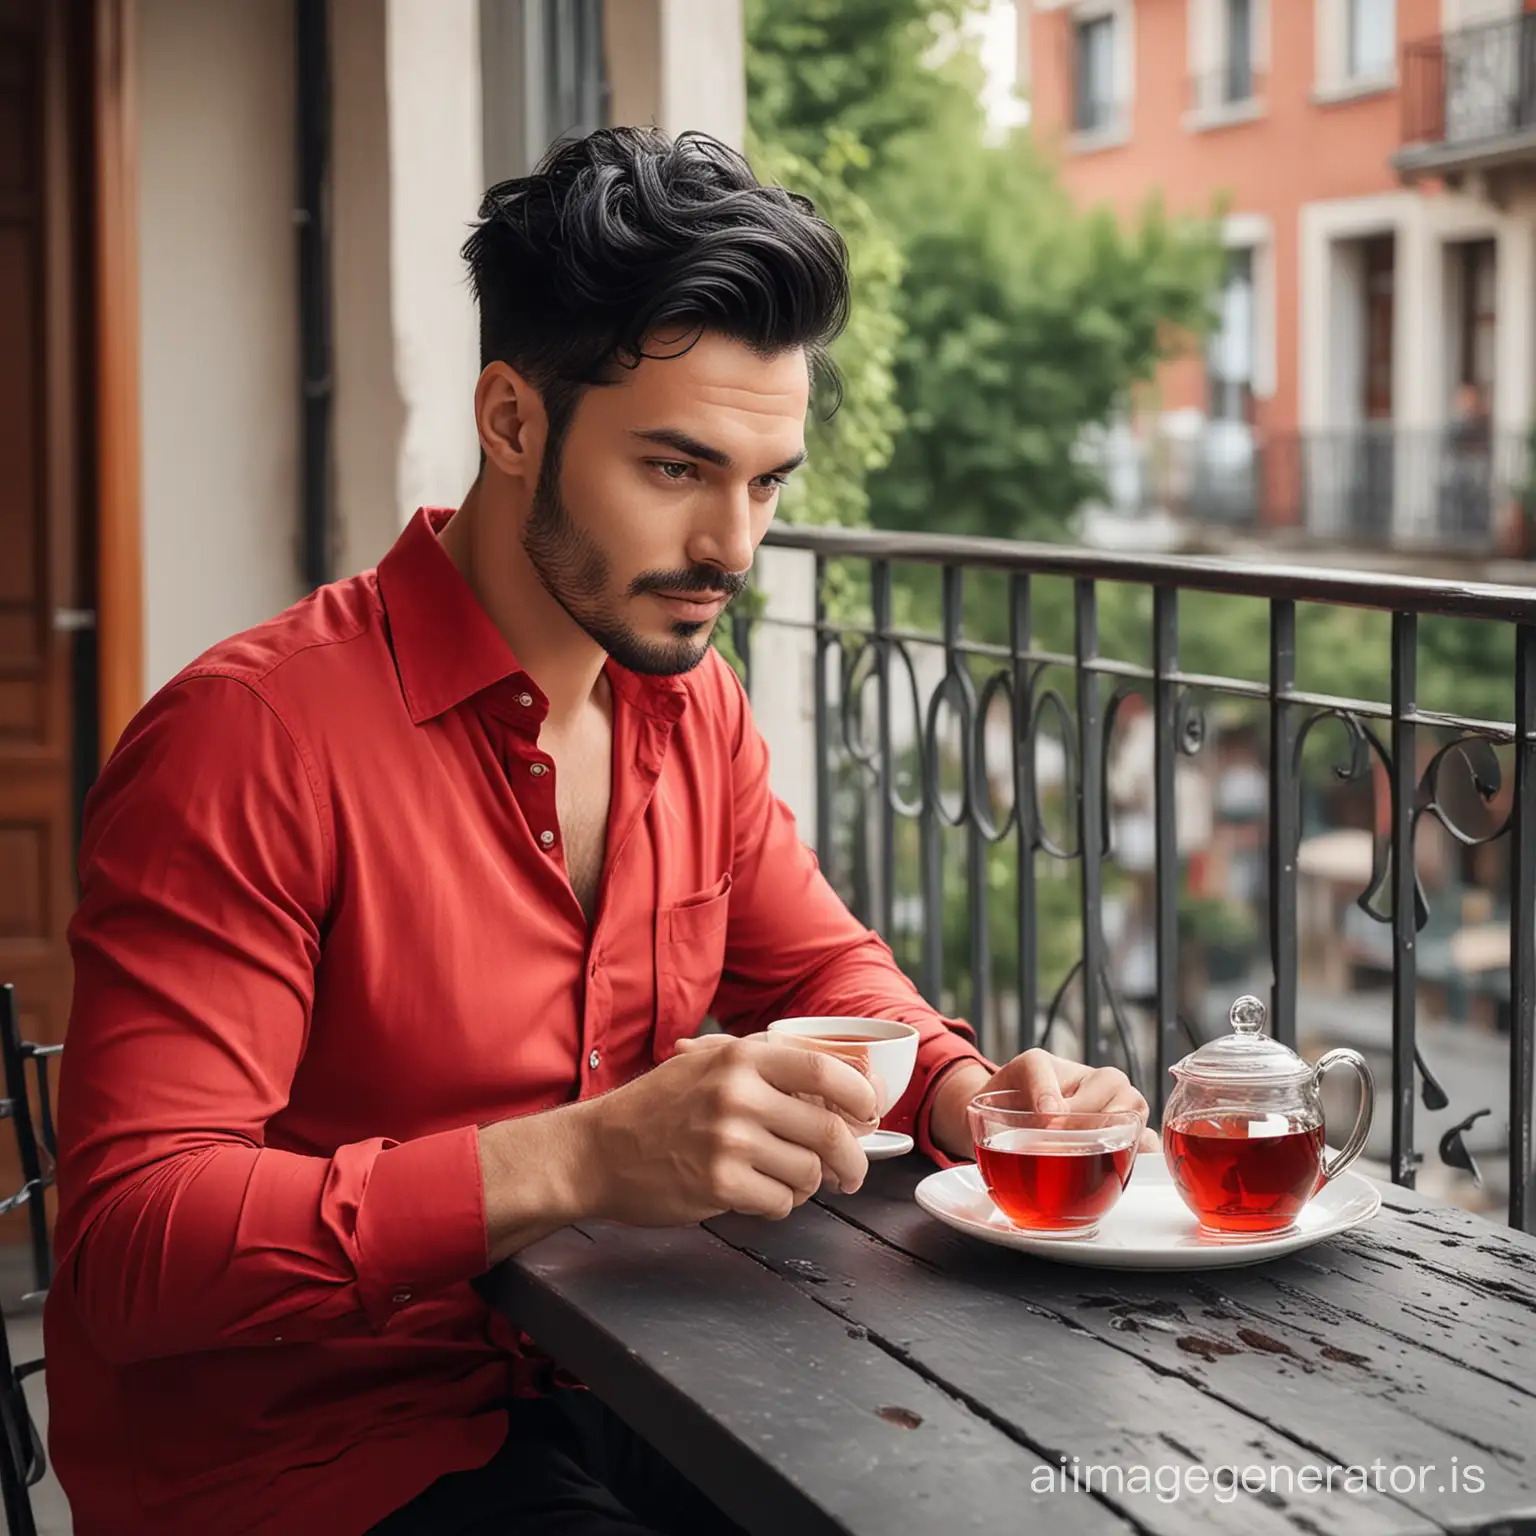 Stylish-Man-Enjoying-Red-Tea-on-Balcony-with-Urban-View